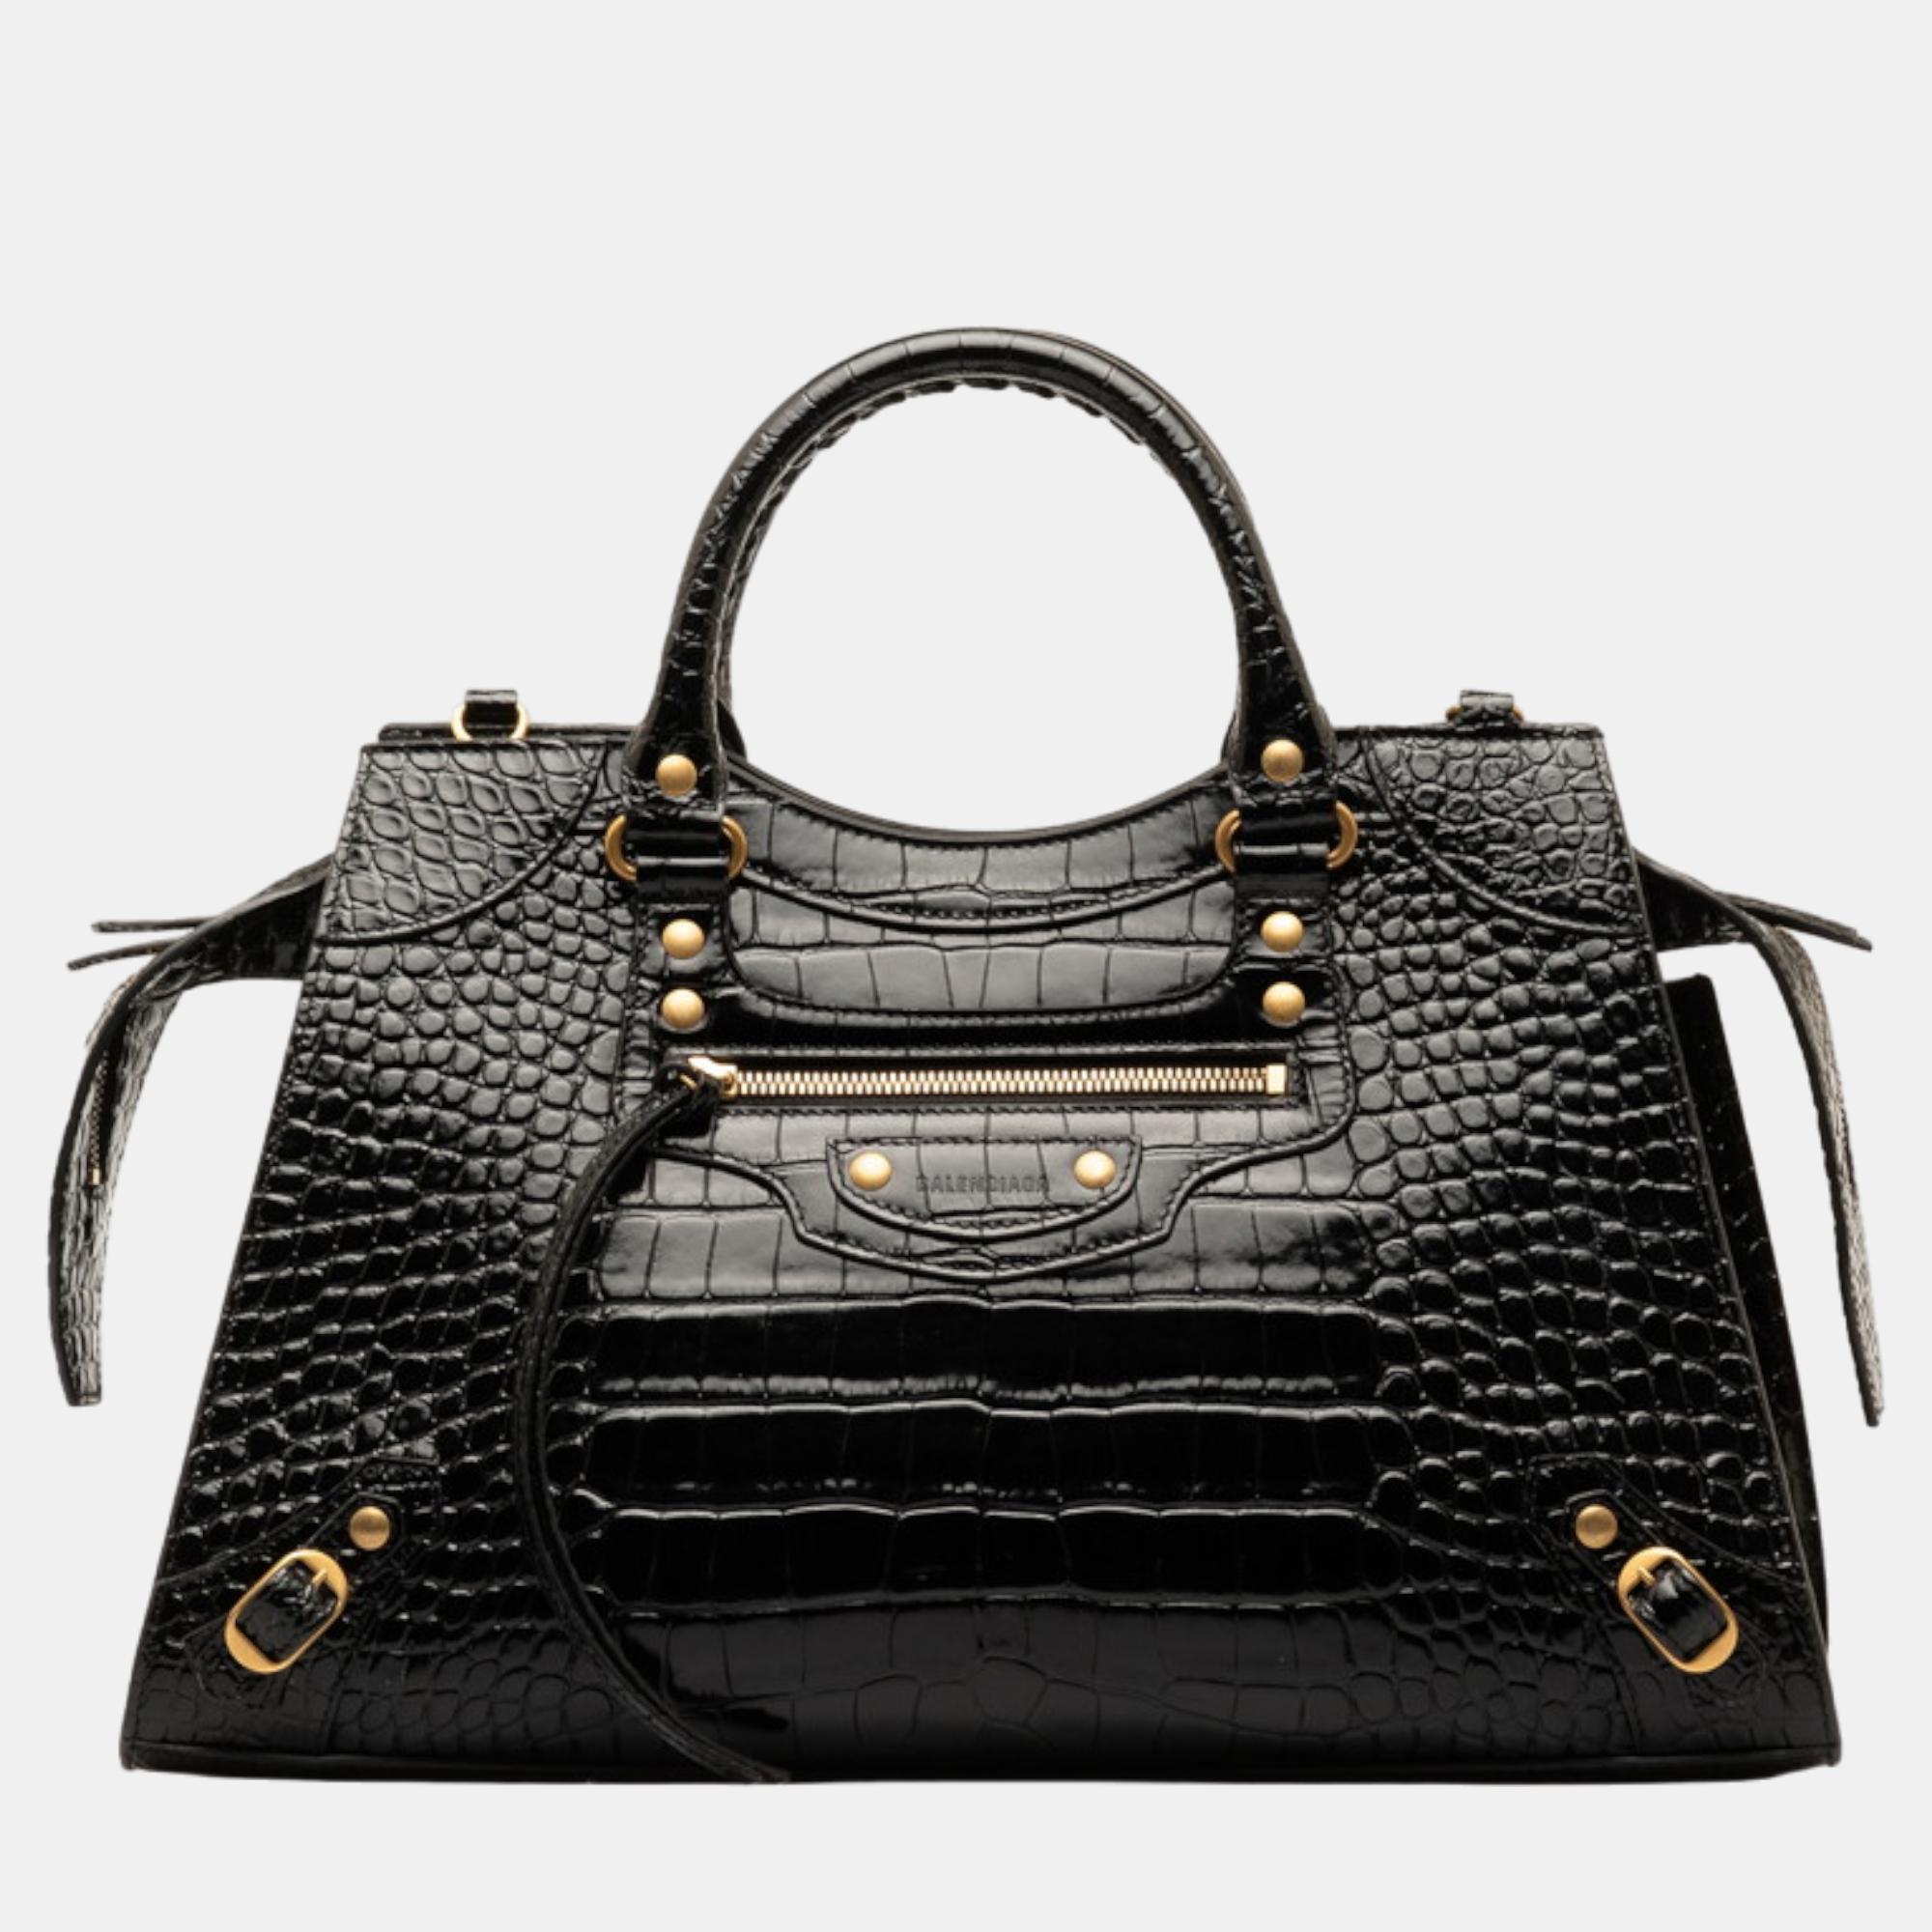 Balenciaga black embossed leather neo classic shoulder bag